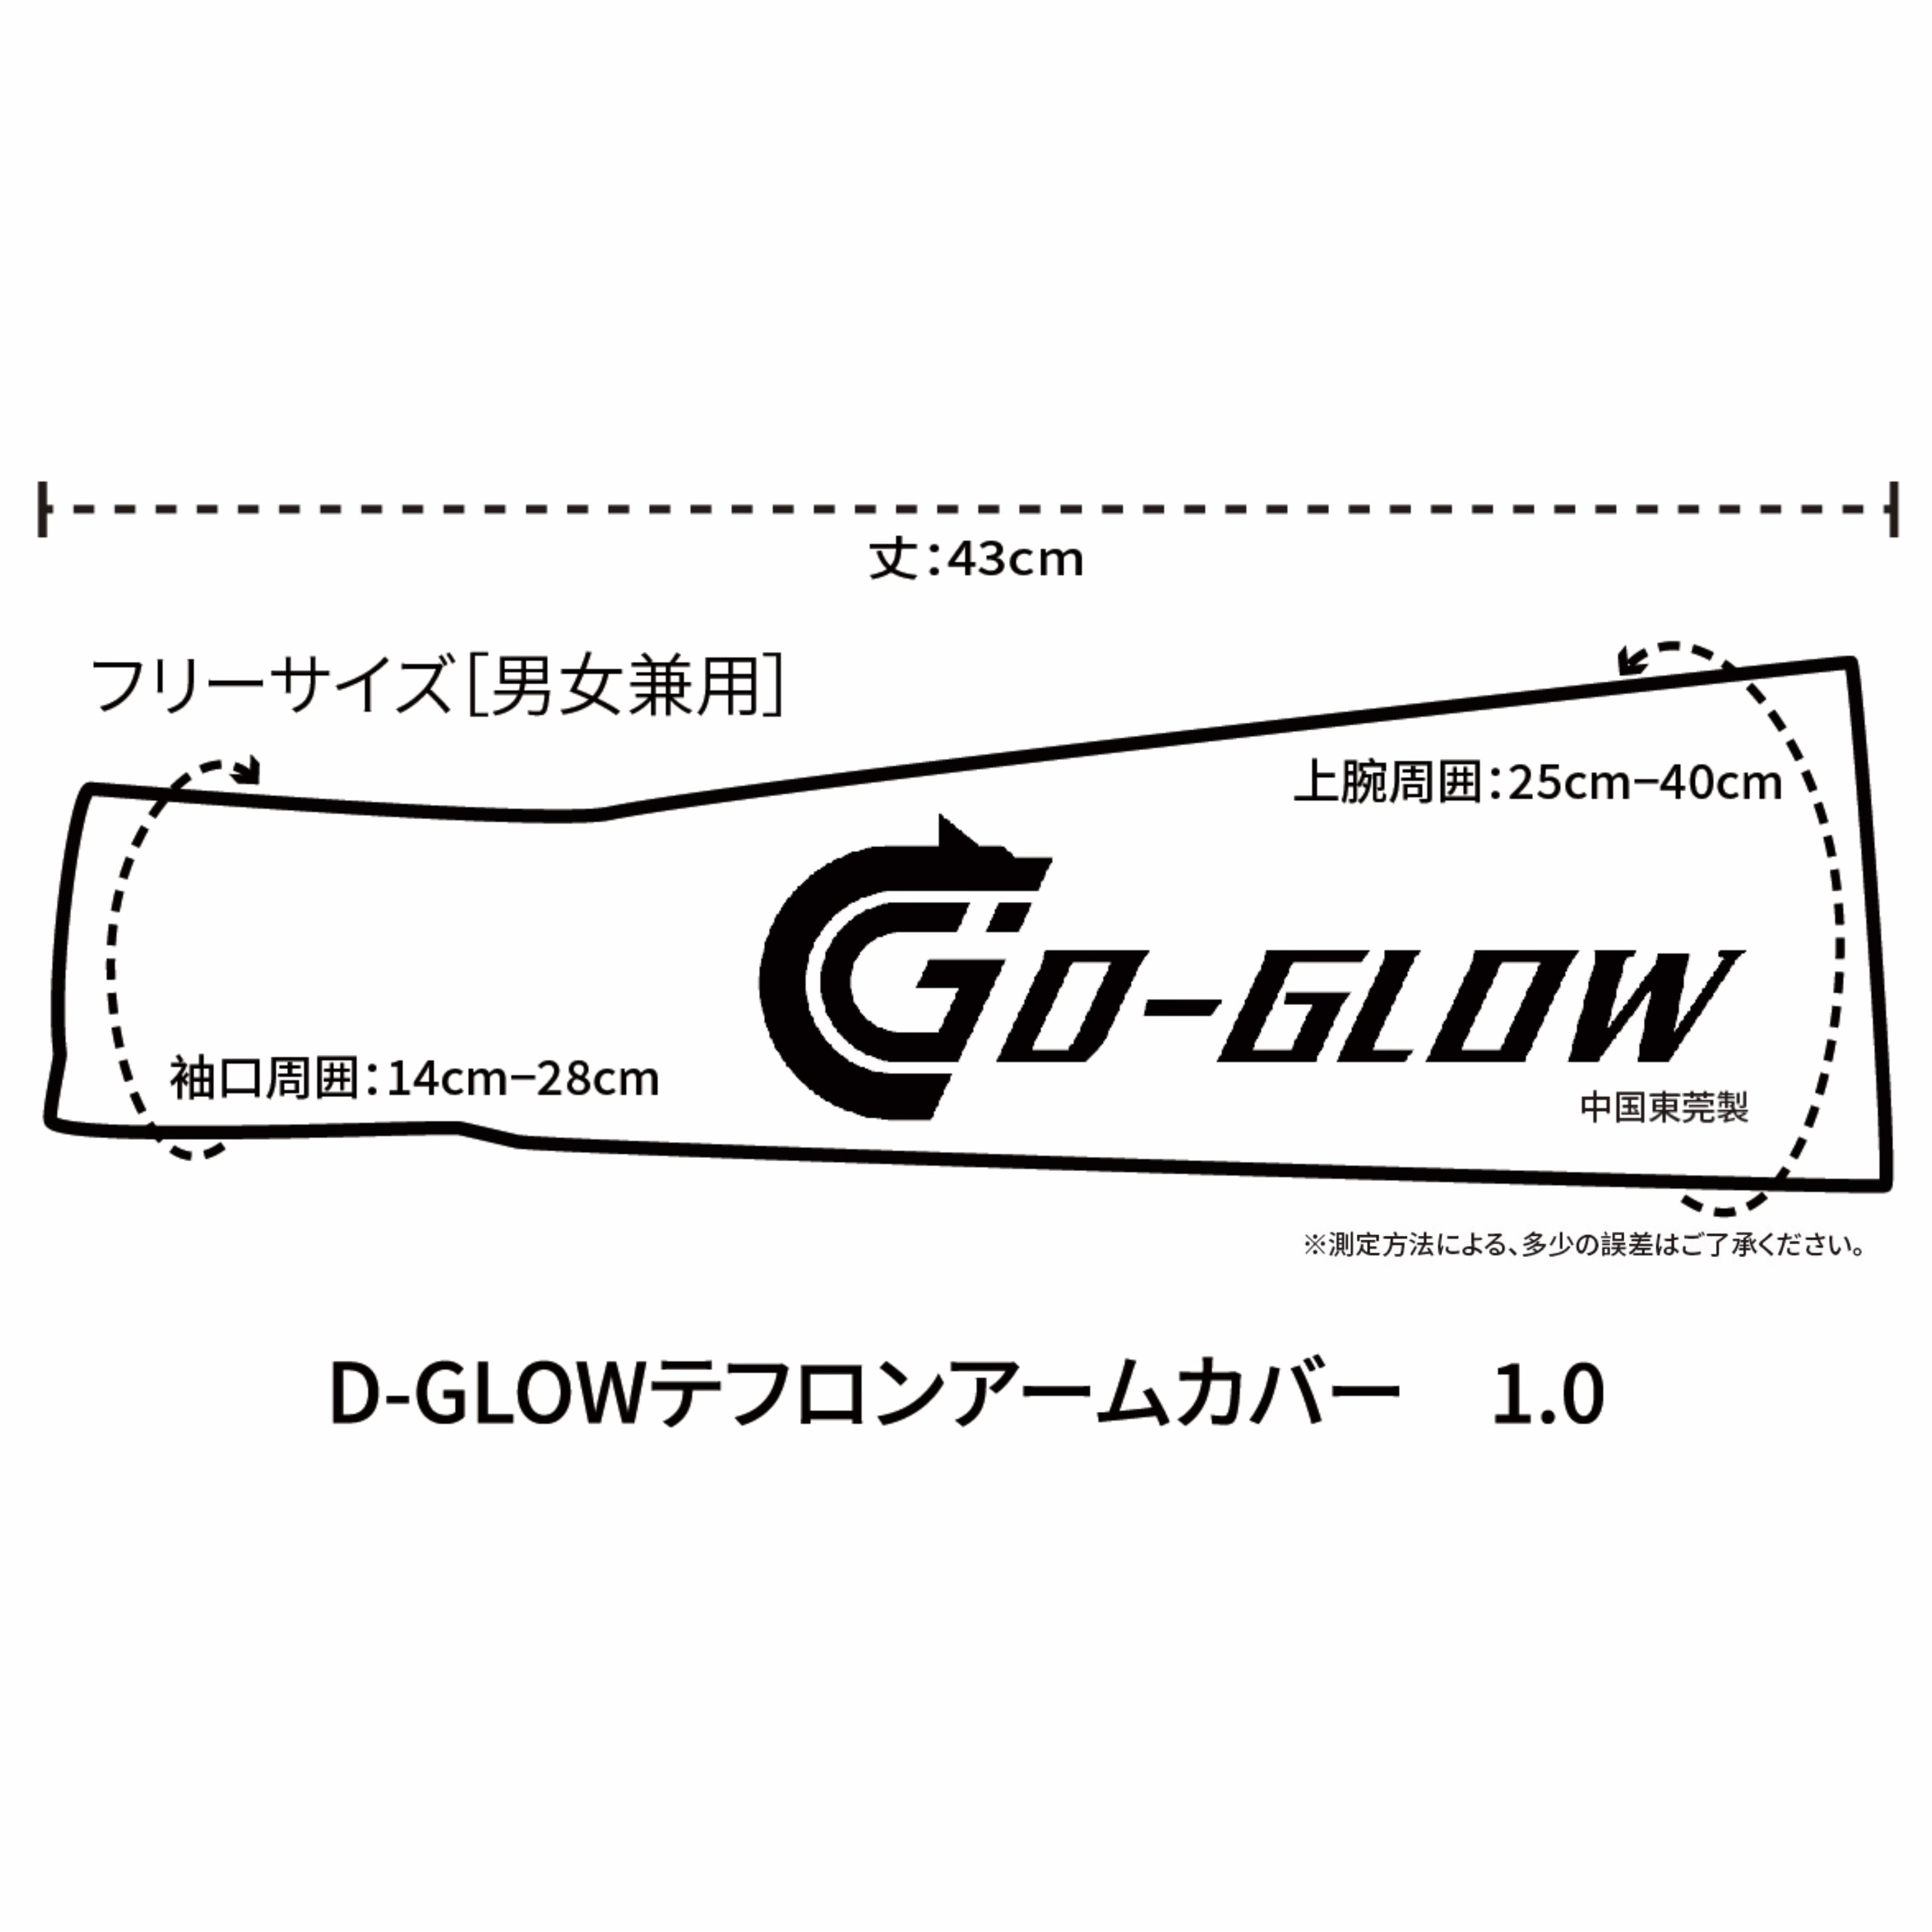 D-GLOW PTFE テフロン加工 ゲーミング アームカバー  1.0